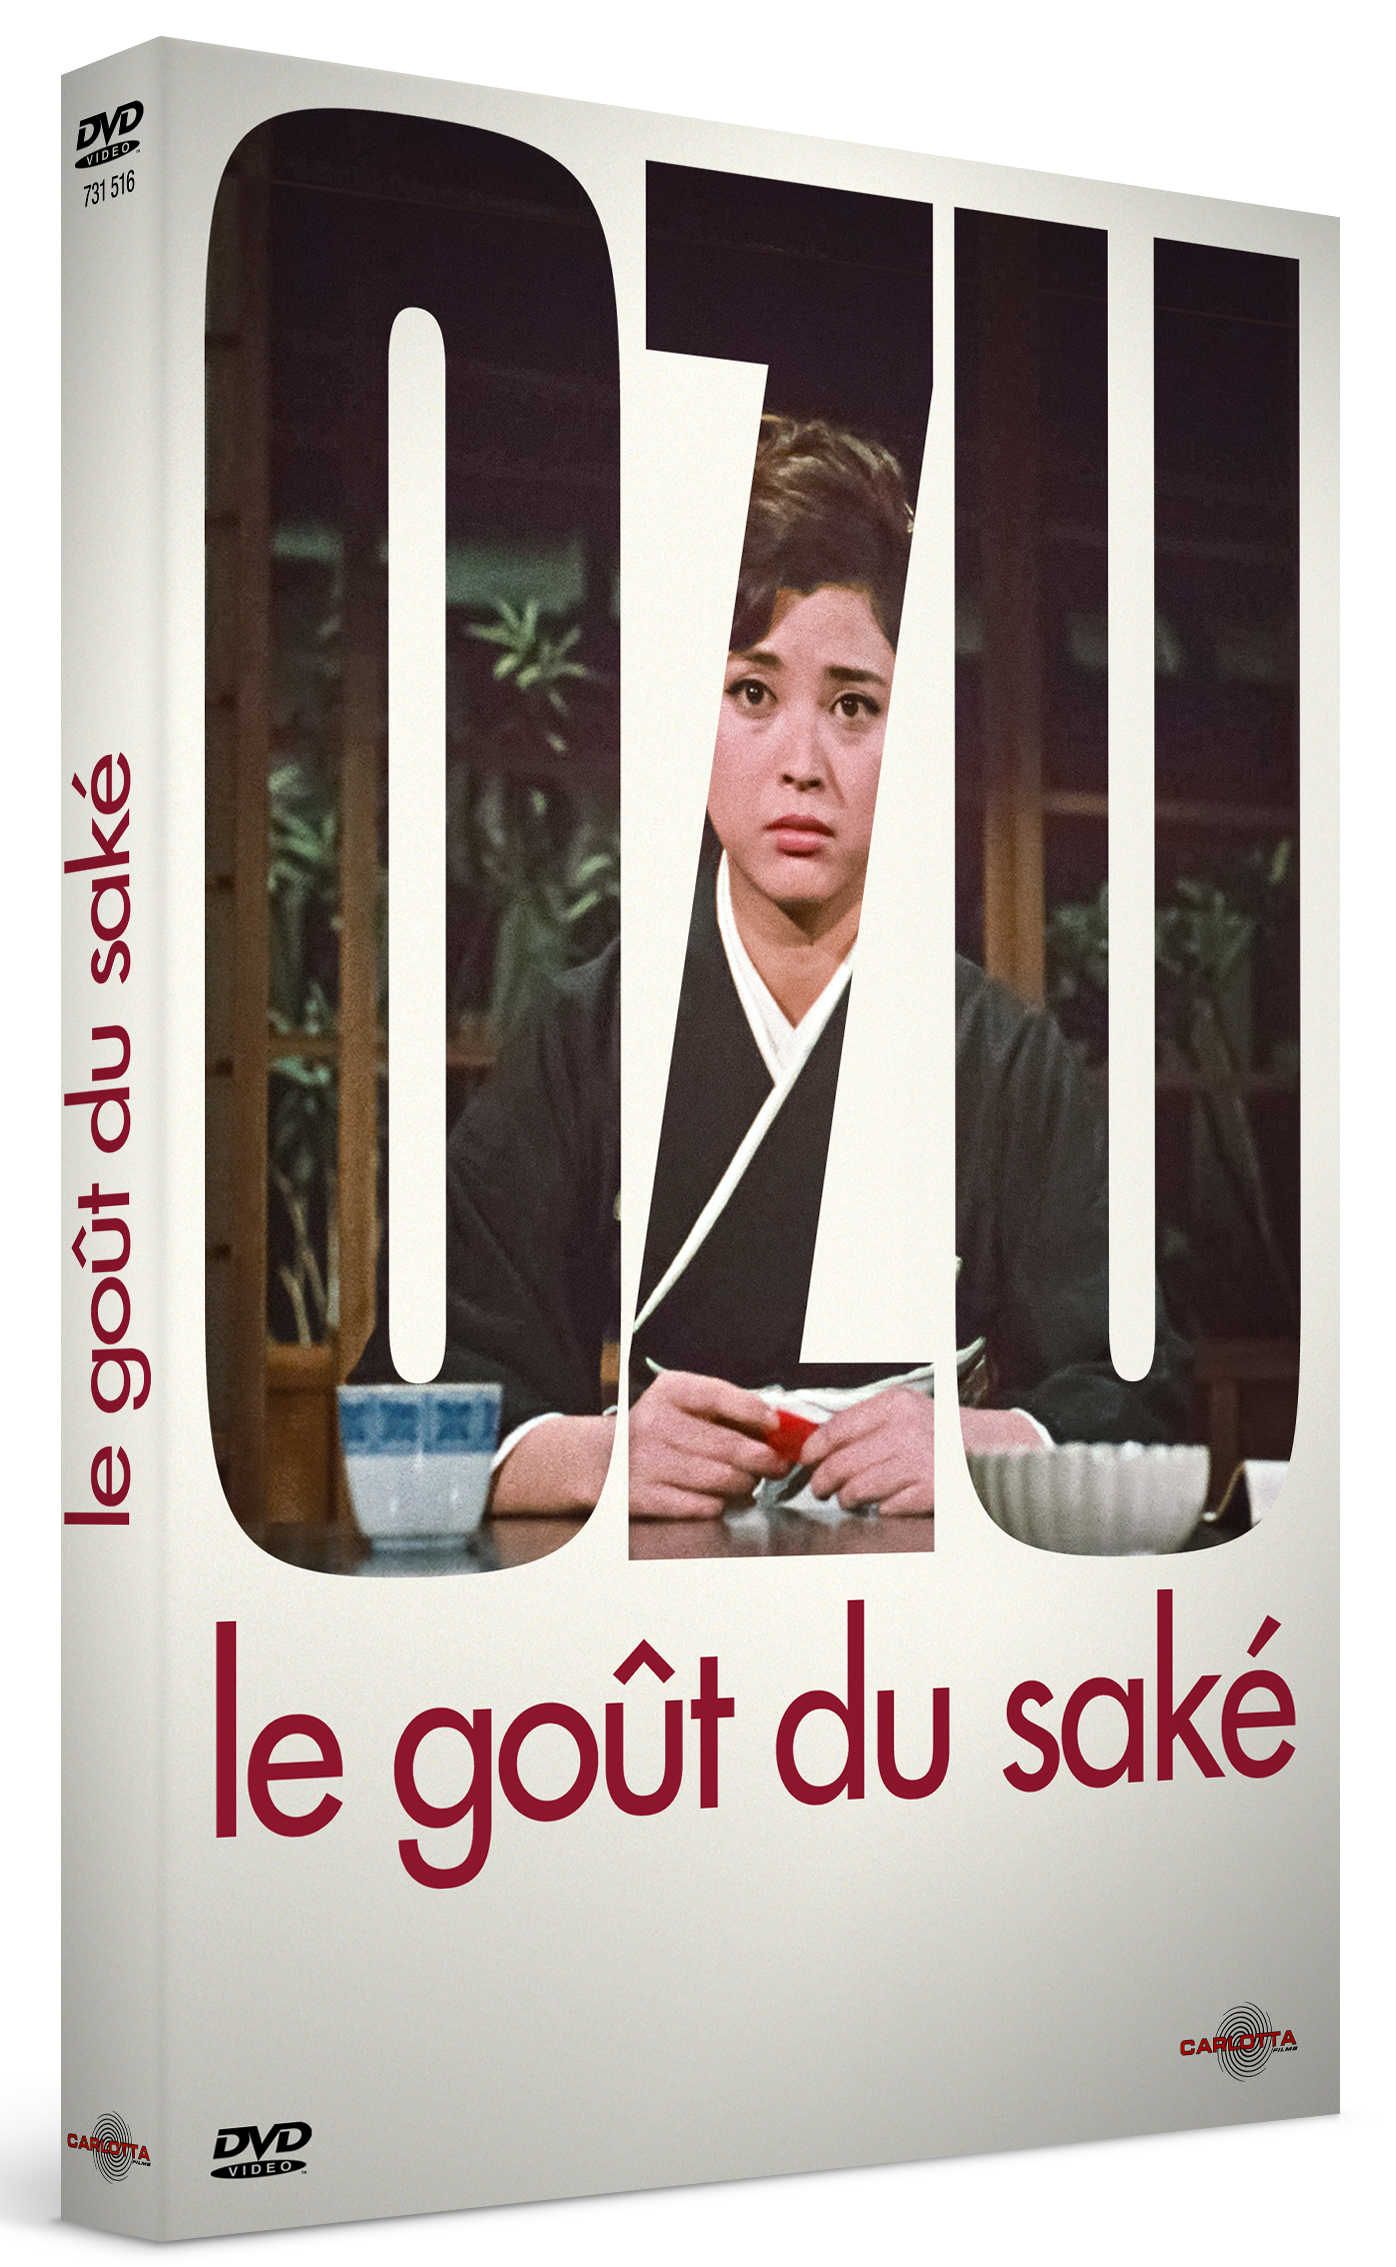 The Taste of Sake by Yasujiro Ozu